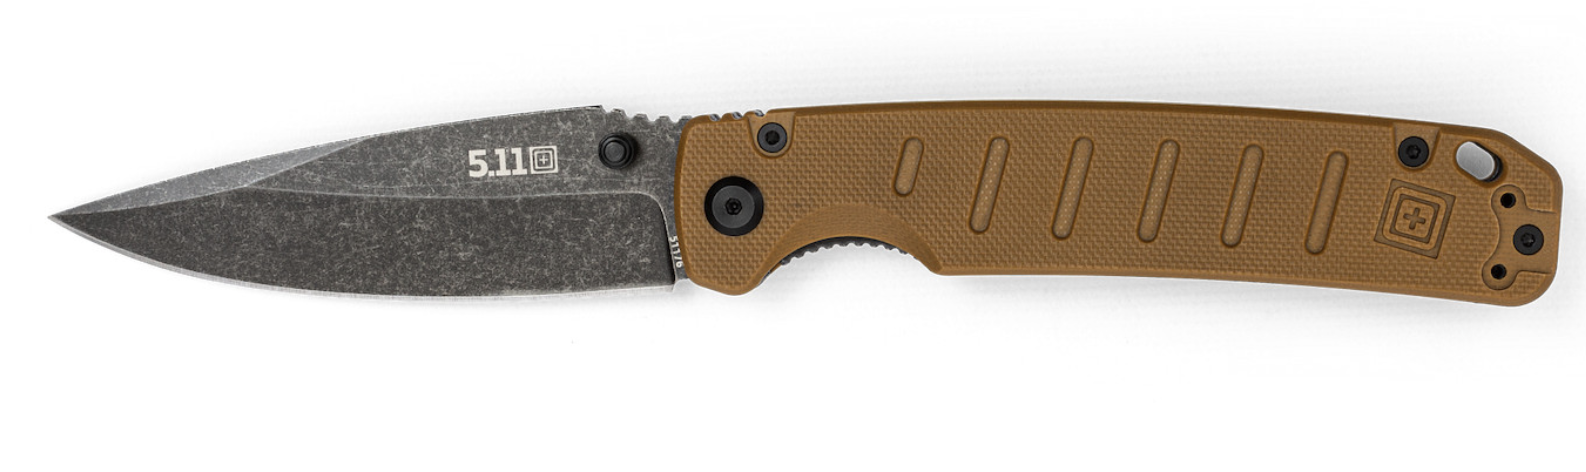 5.11 - Braddock DP Knife Full - Kangaroo (134)